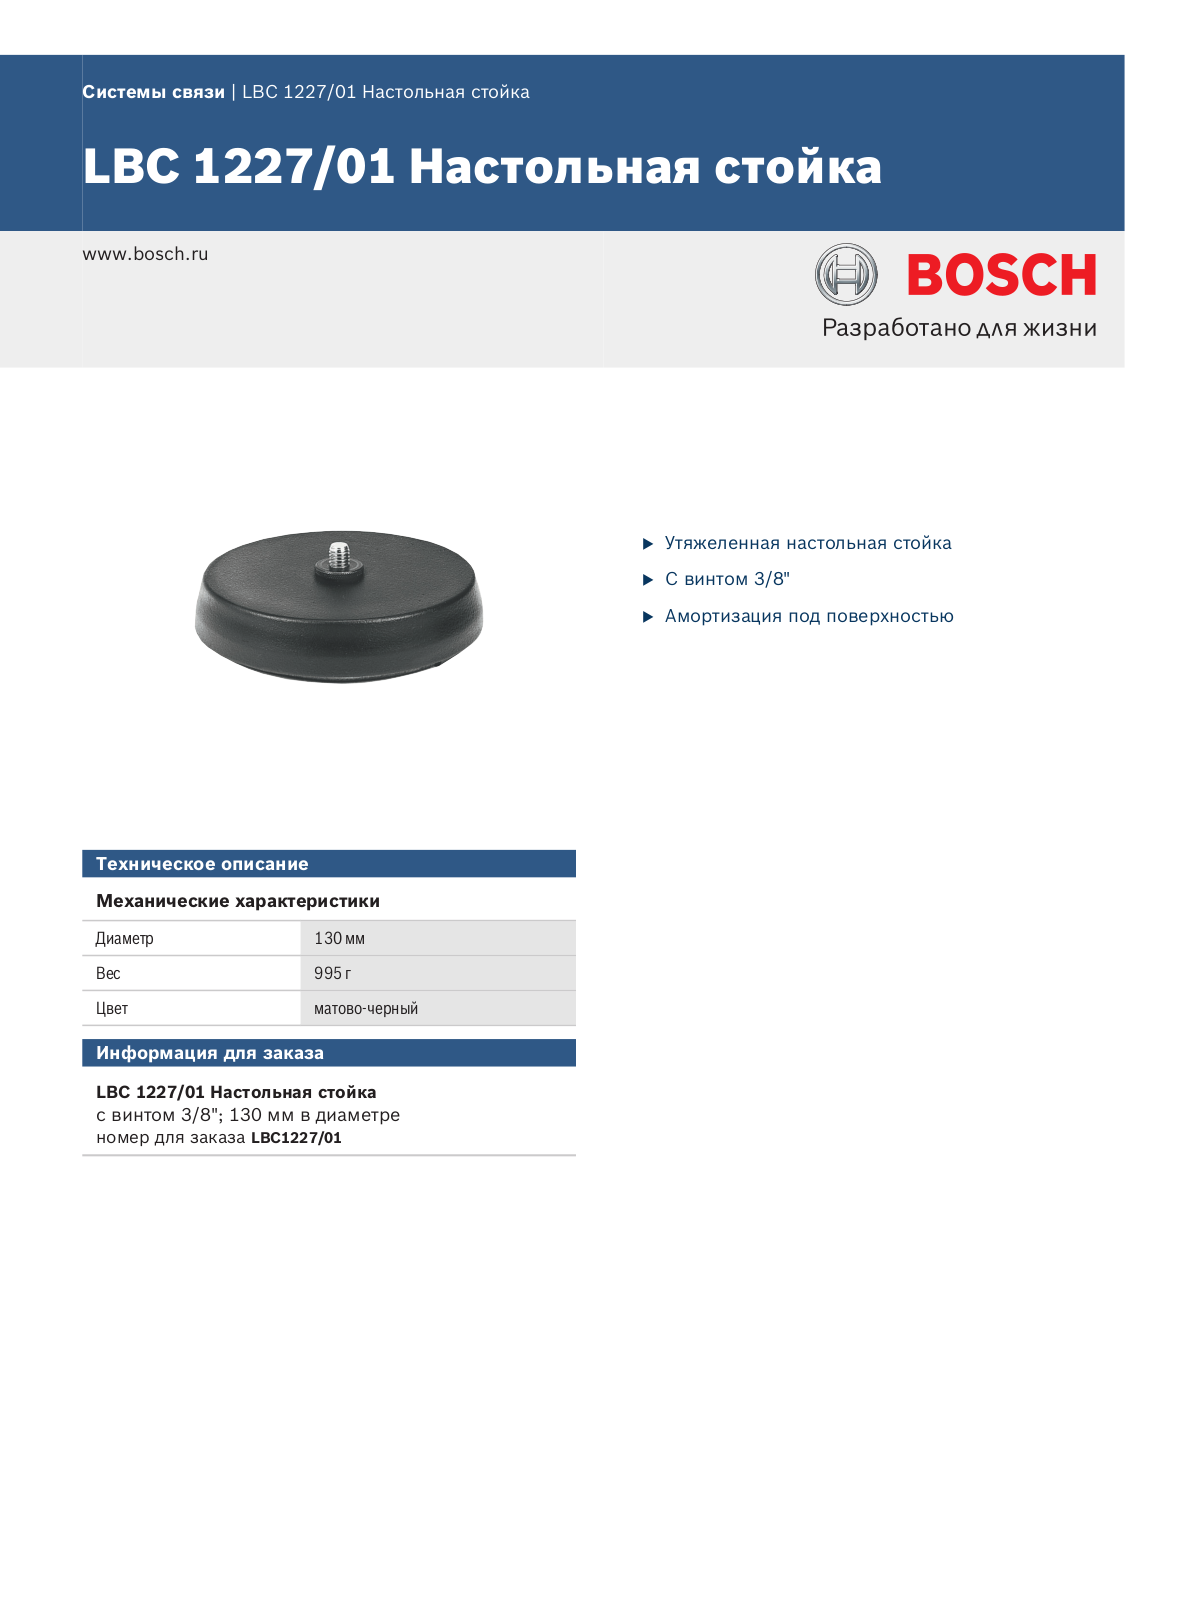 BOSCH LBC 1227 User Manual